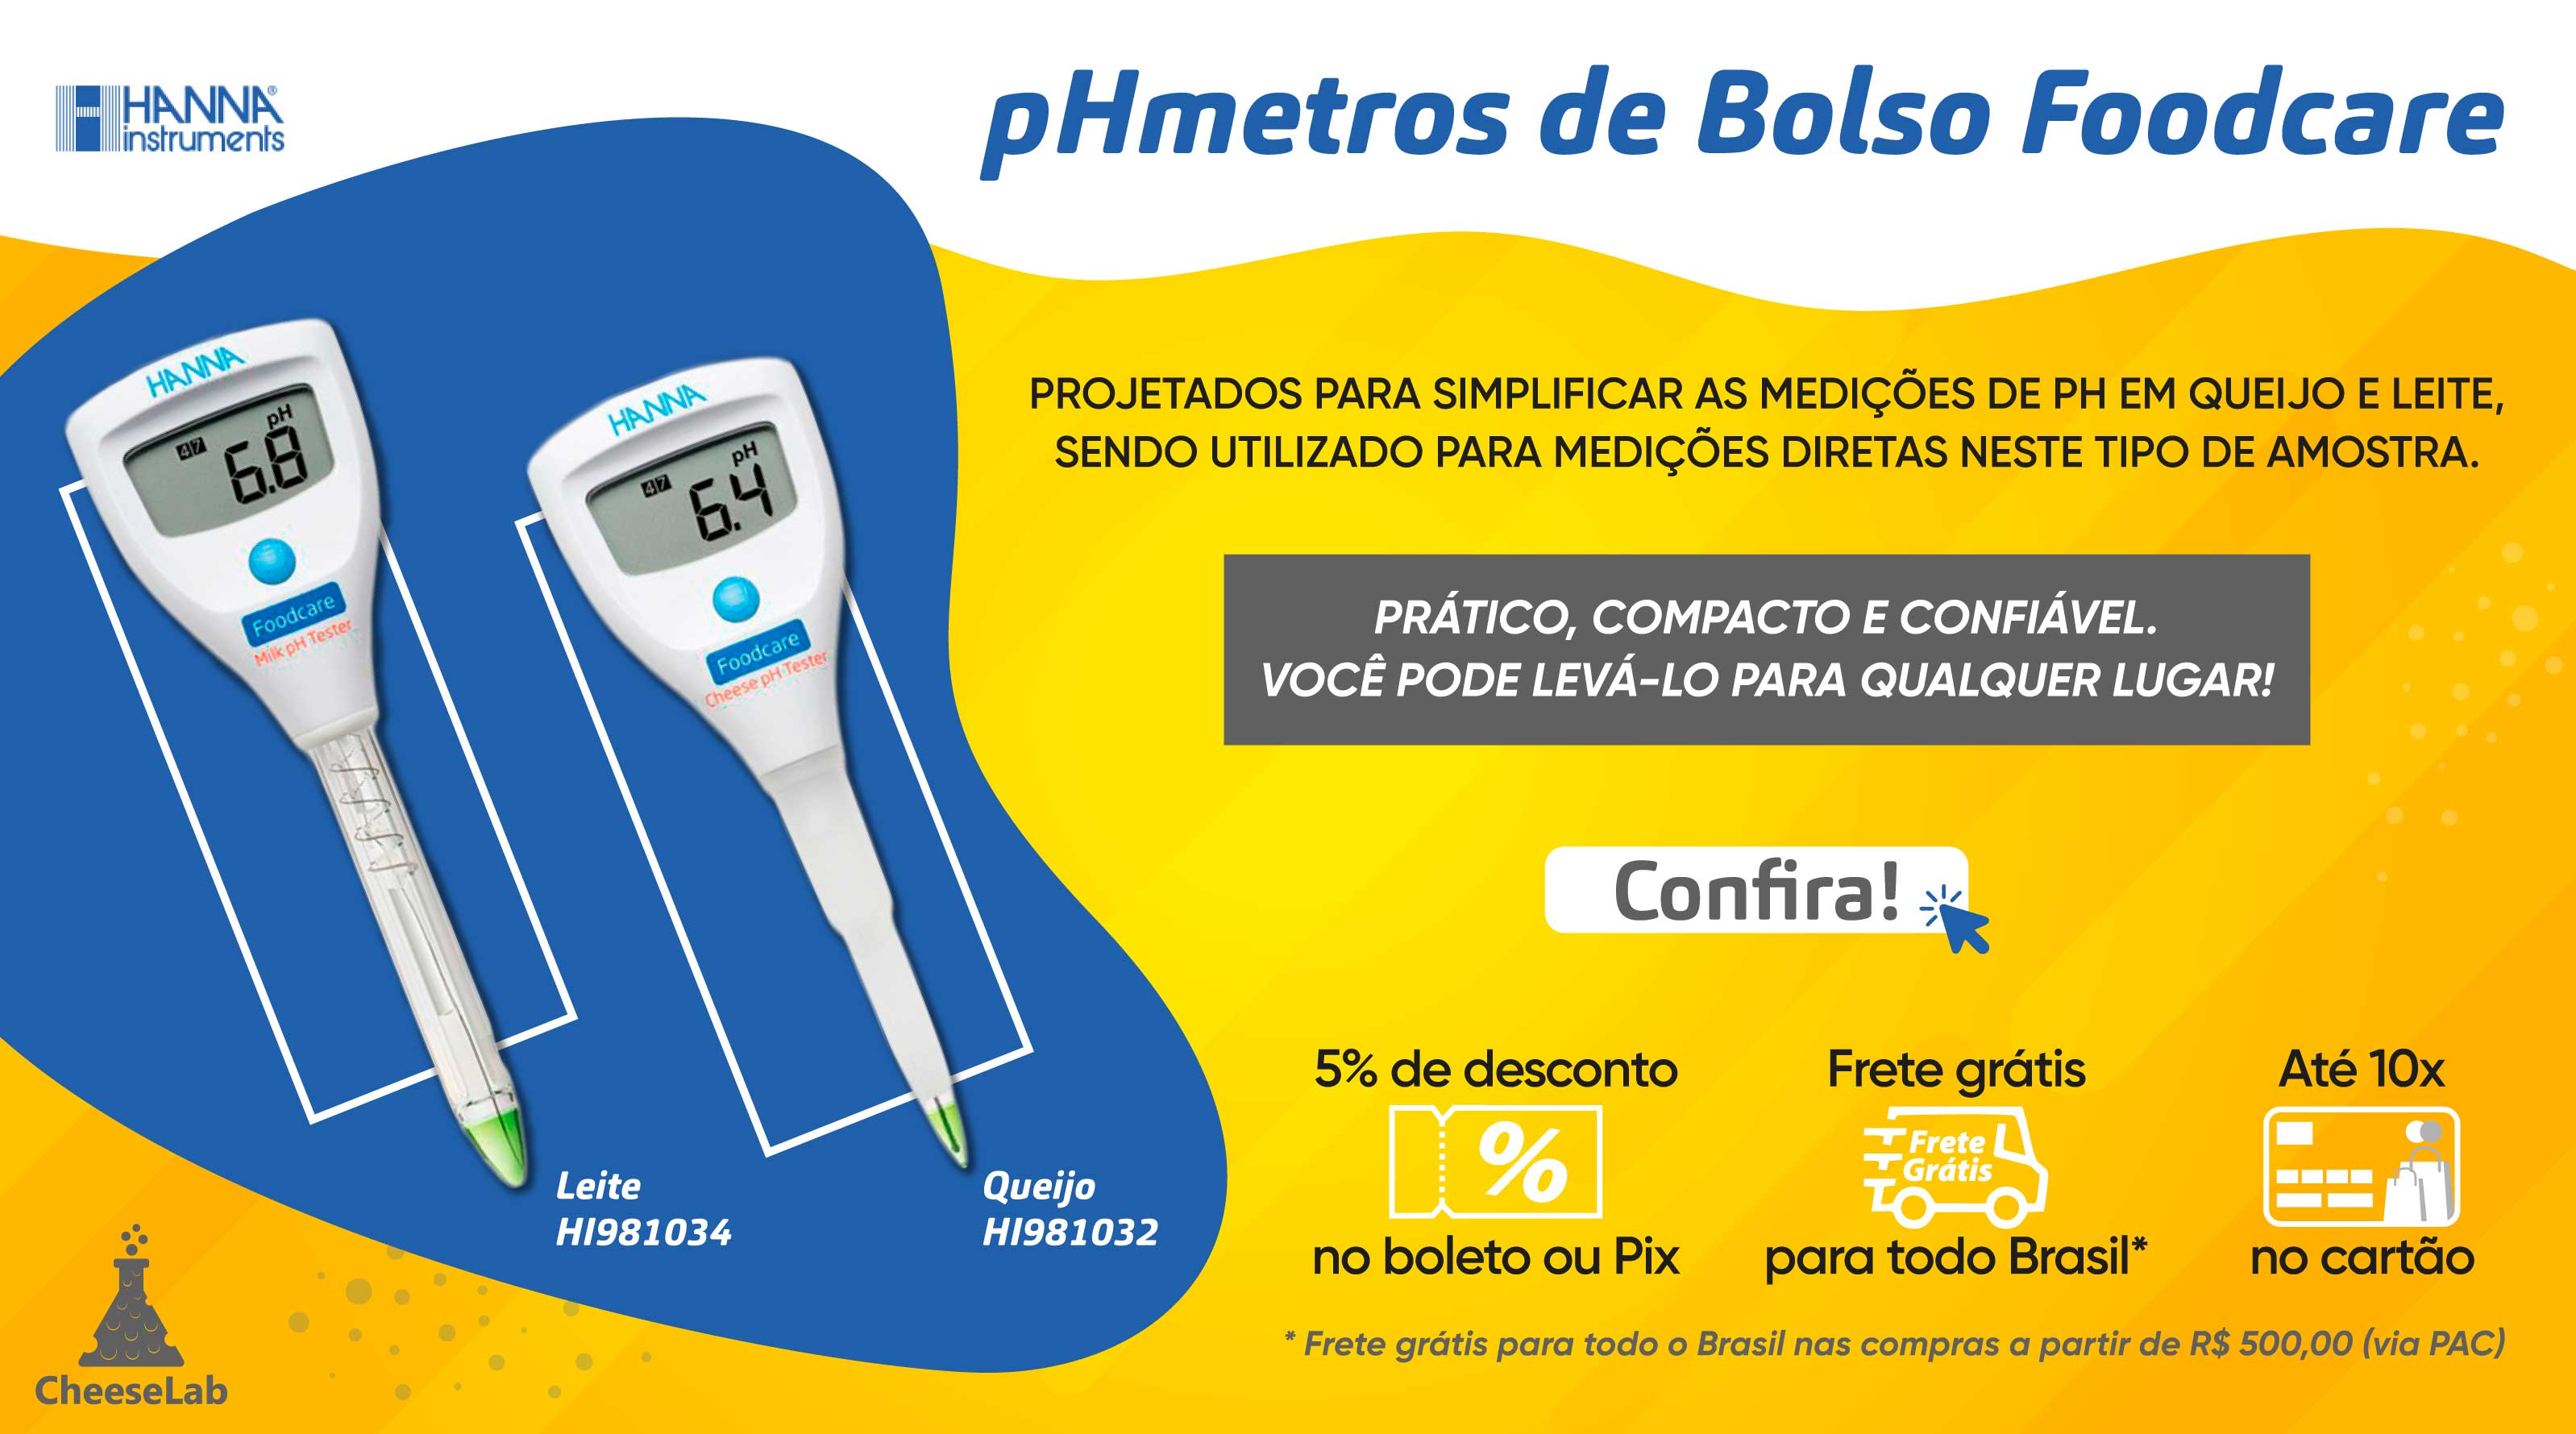 SMARTPHONE (MOBILE) - pHmetro de Bolso Foodcare